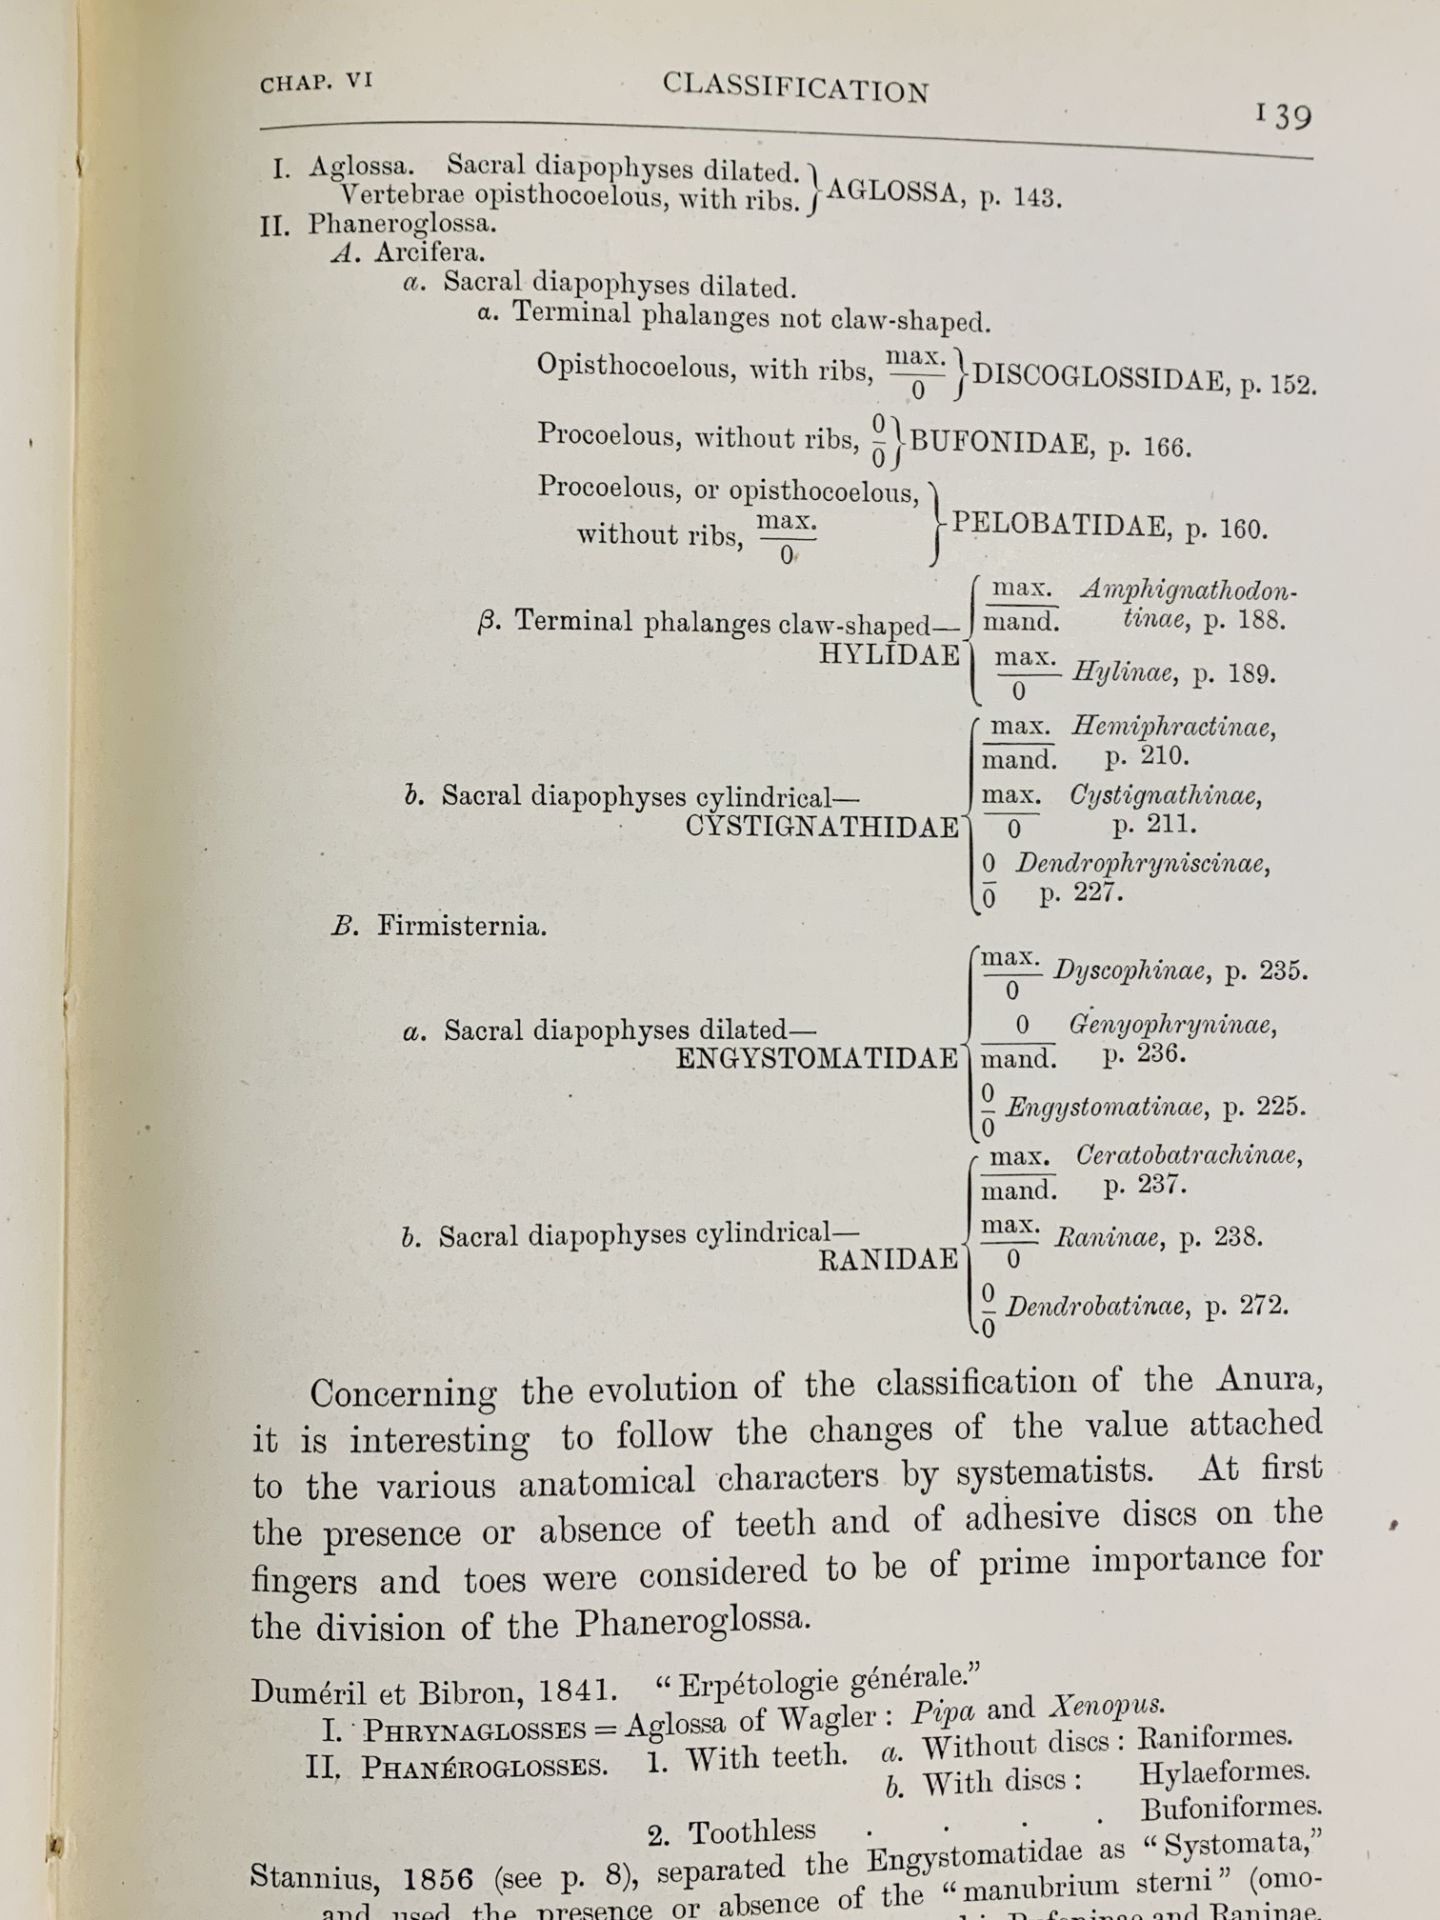 The Cambridge Natural History, 10 volume set published 1895-1913 - Image 3 of 4